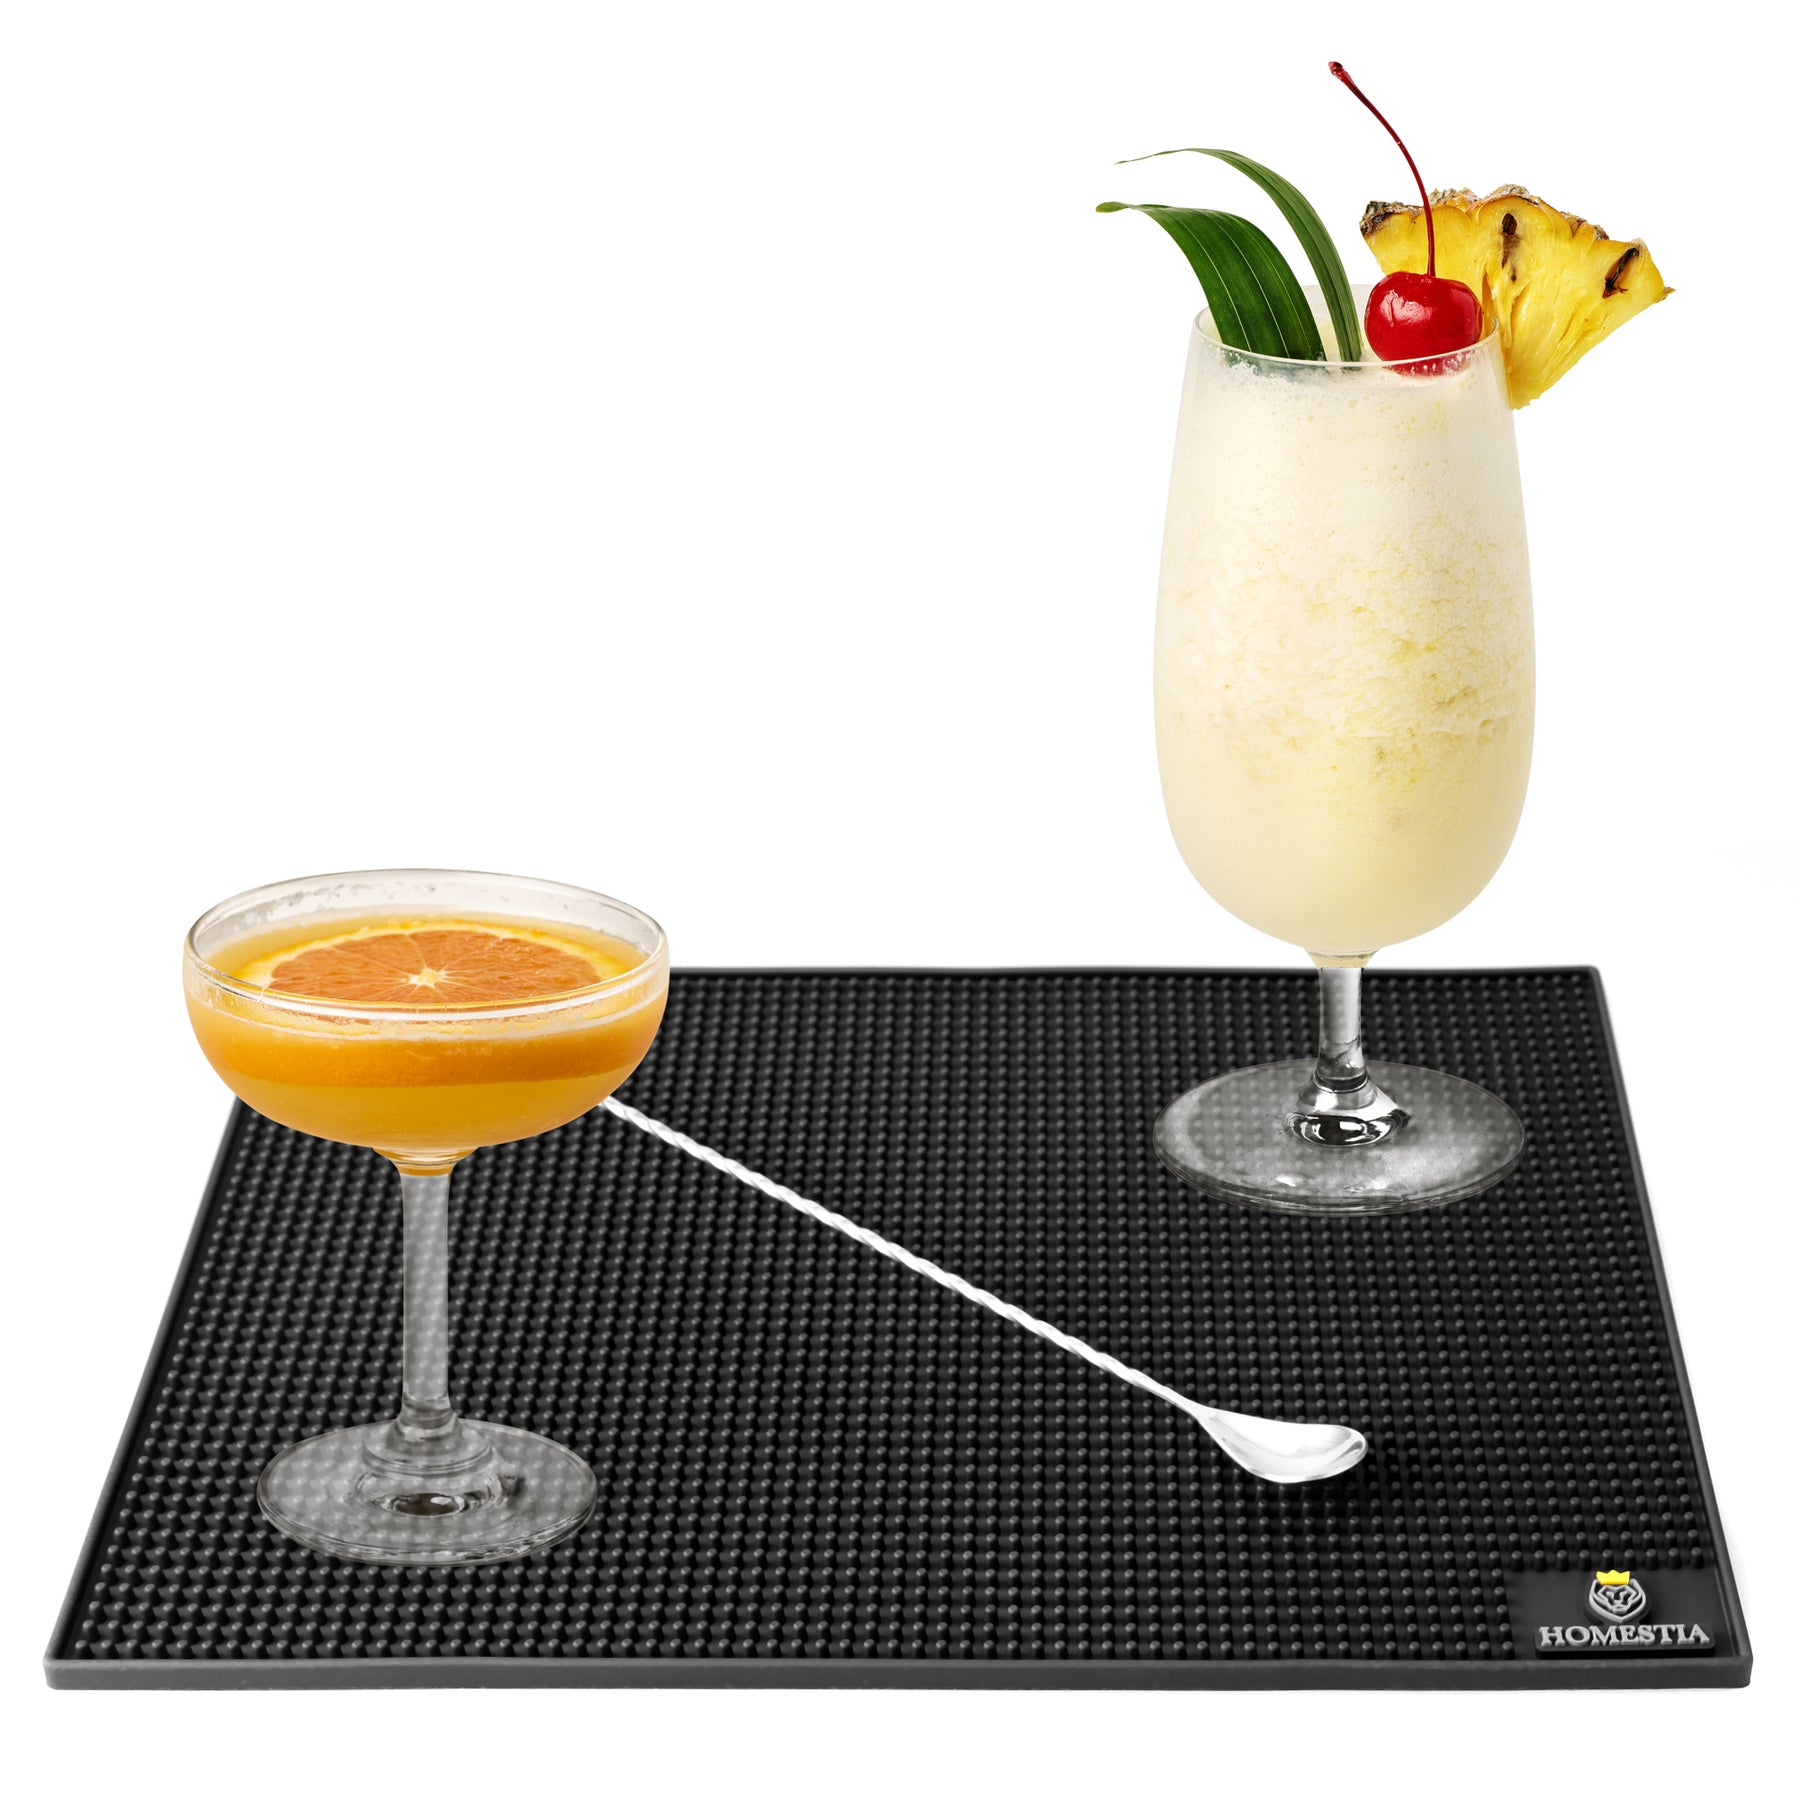 Multi-Use Cocktail Barmat